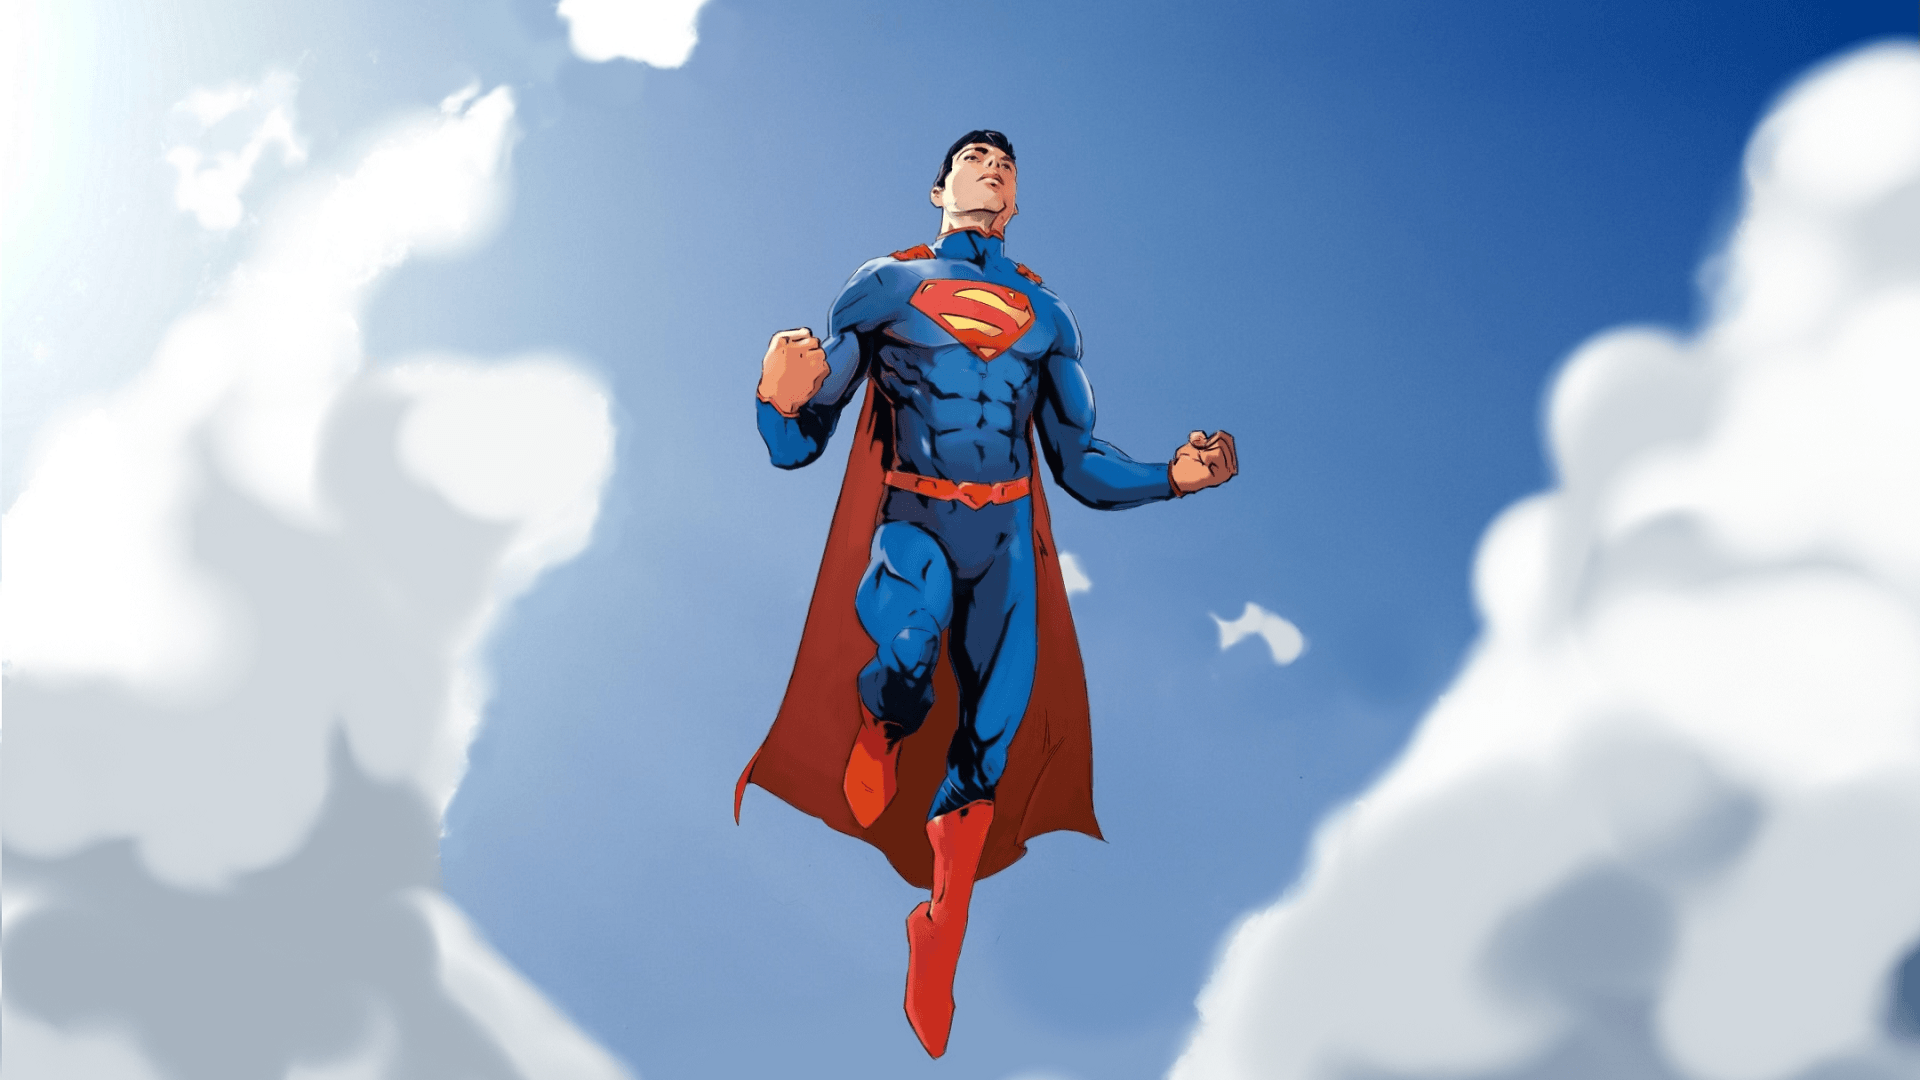 Superman Cartoon Wallpapers Wallpaper Cave